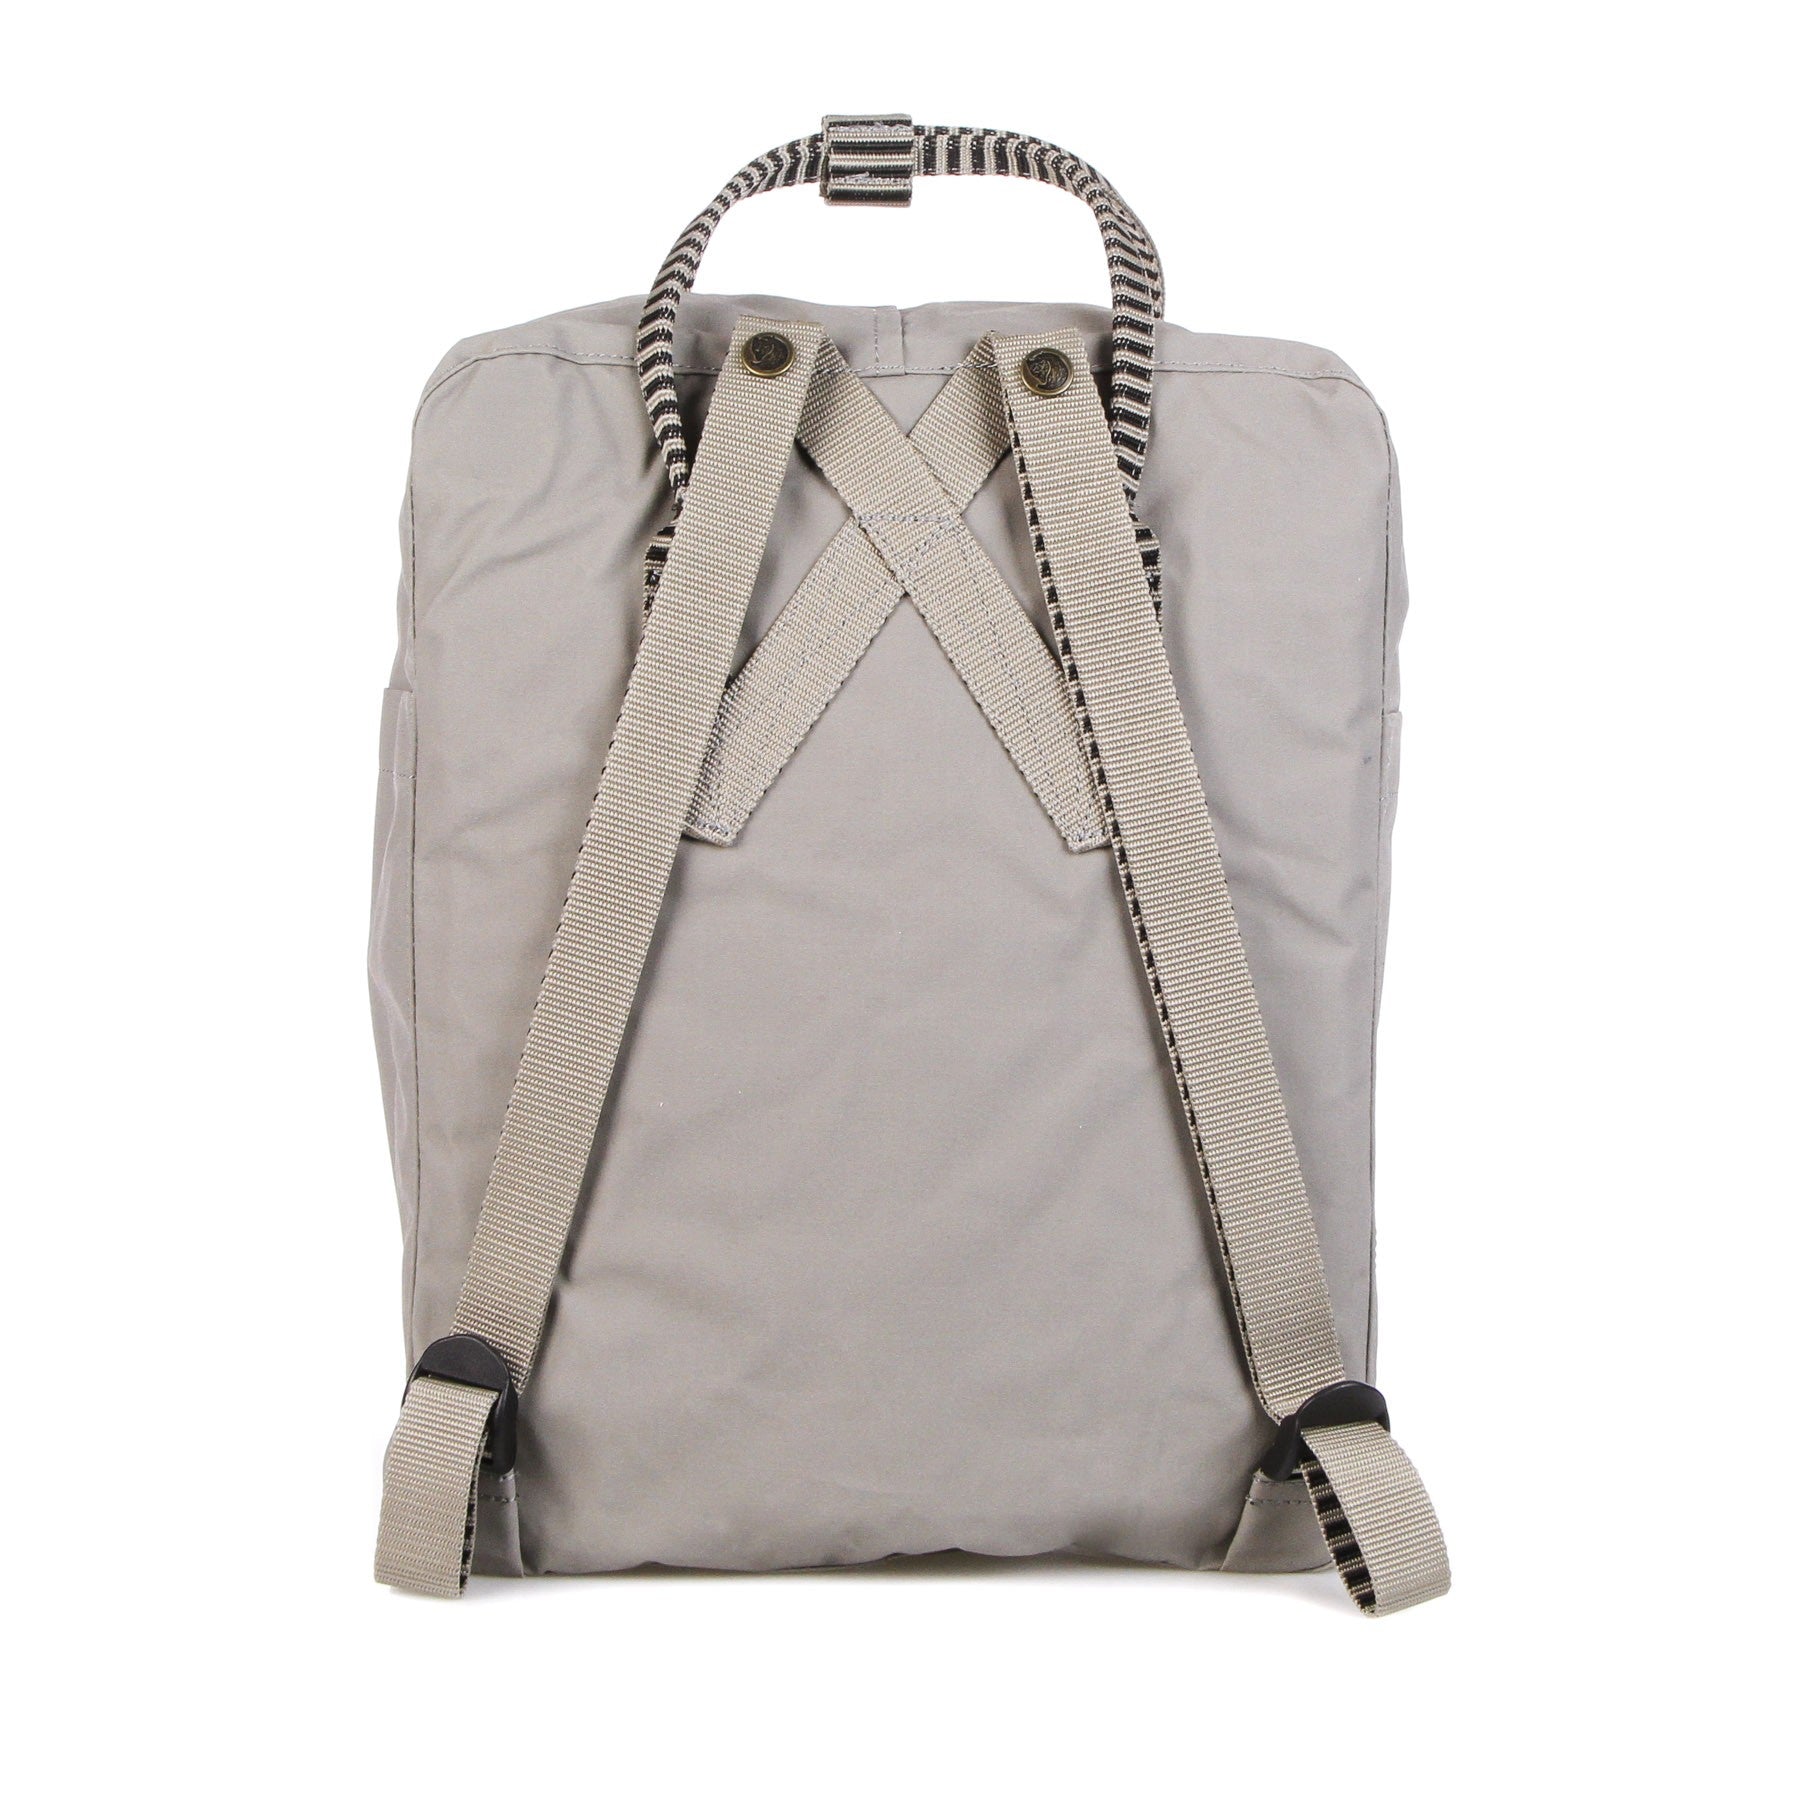 Unisex Kanken Fog/striped backpack